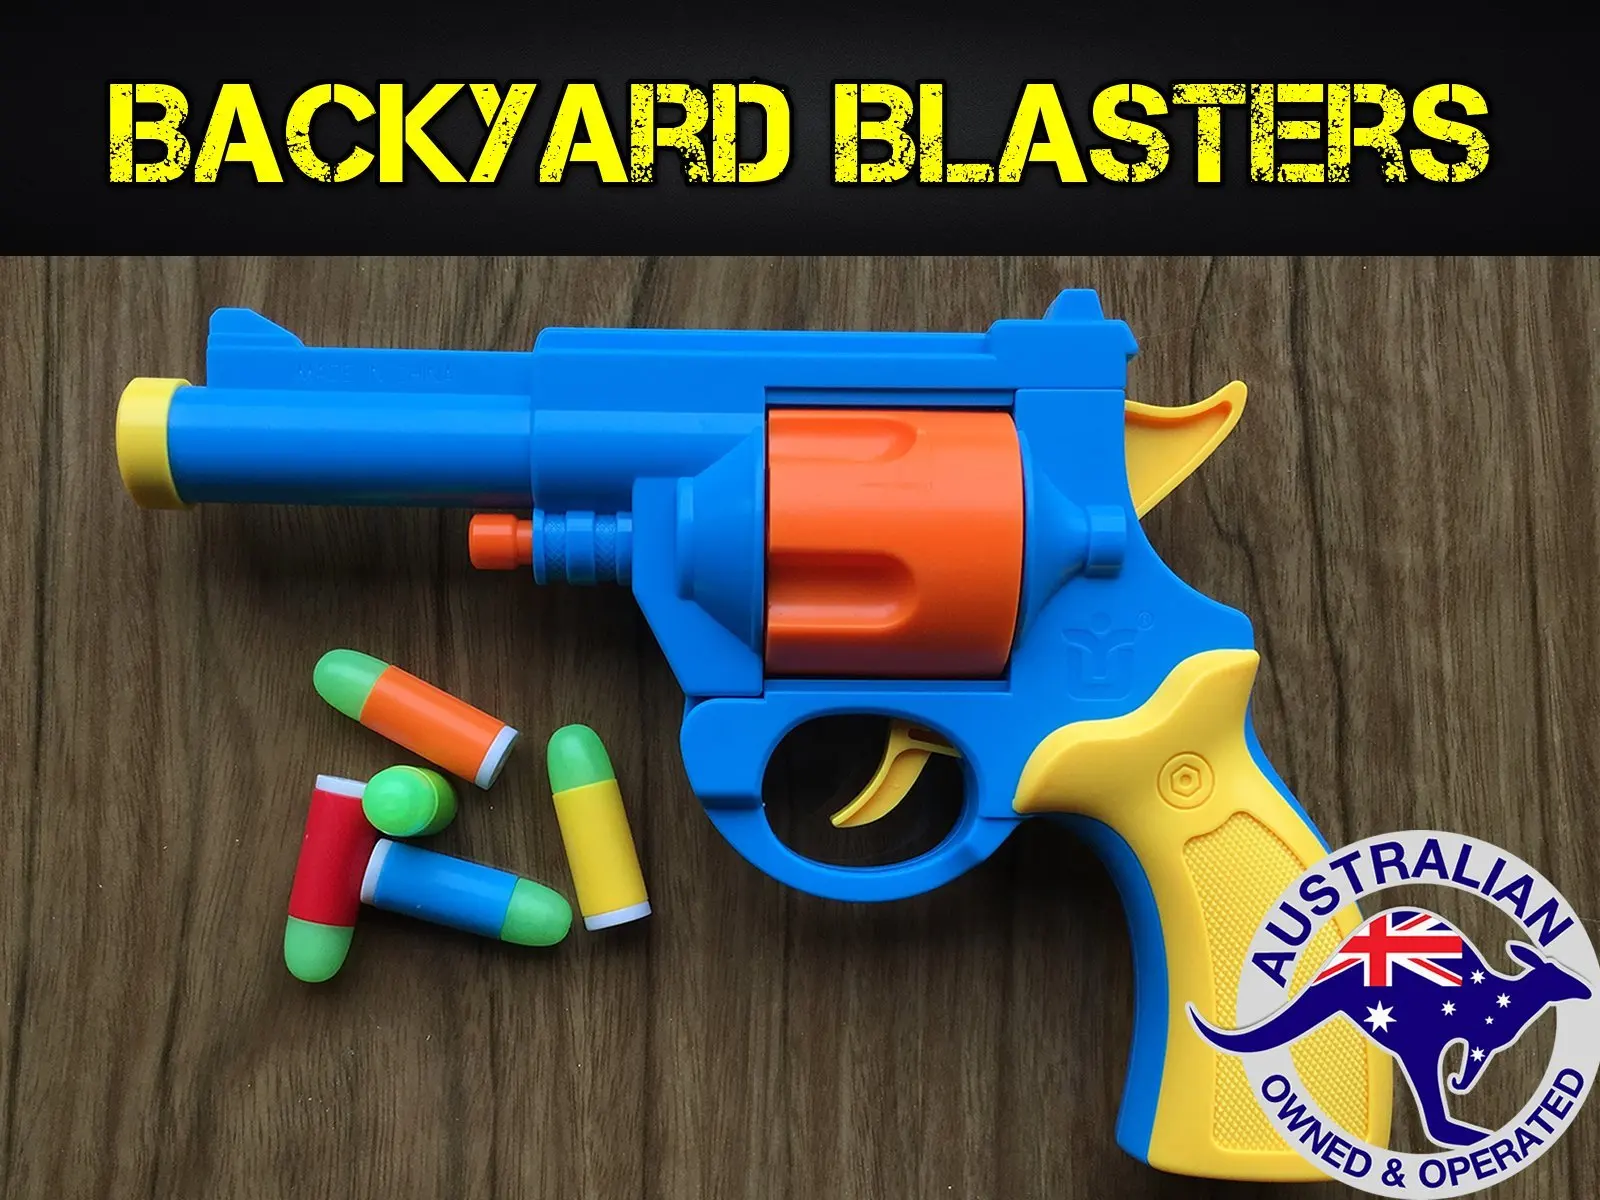 Backyard Blasters Realistic 1:1 Scale .45 ACP Revolver Prop - Rubber Bullet...